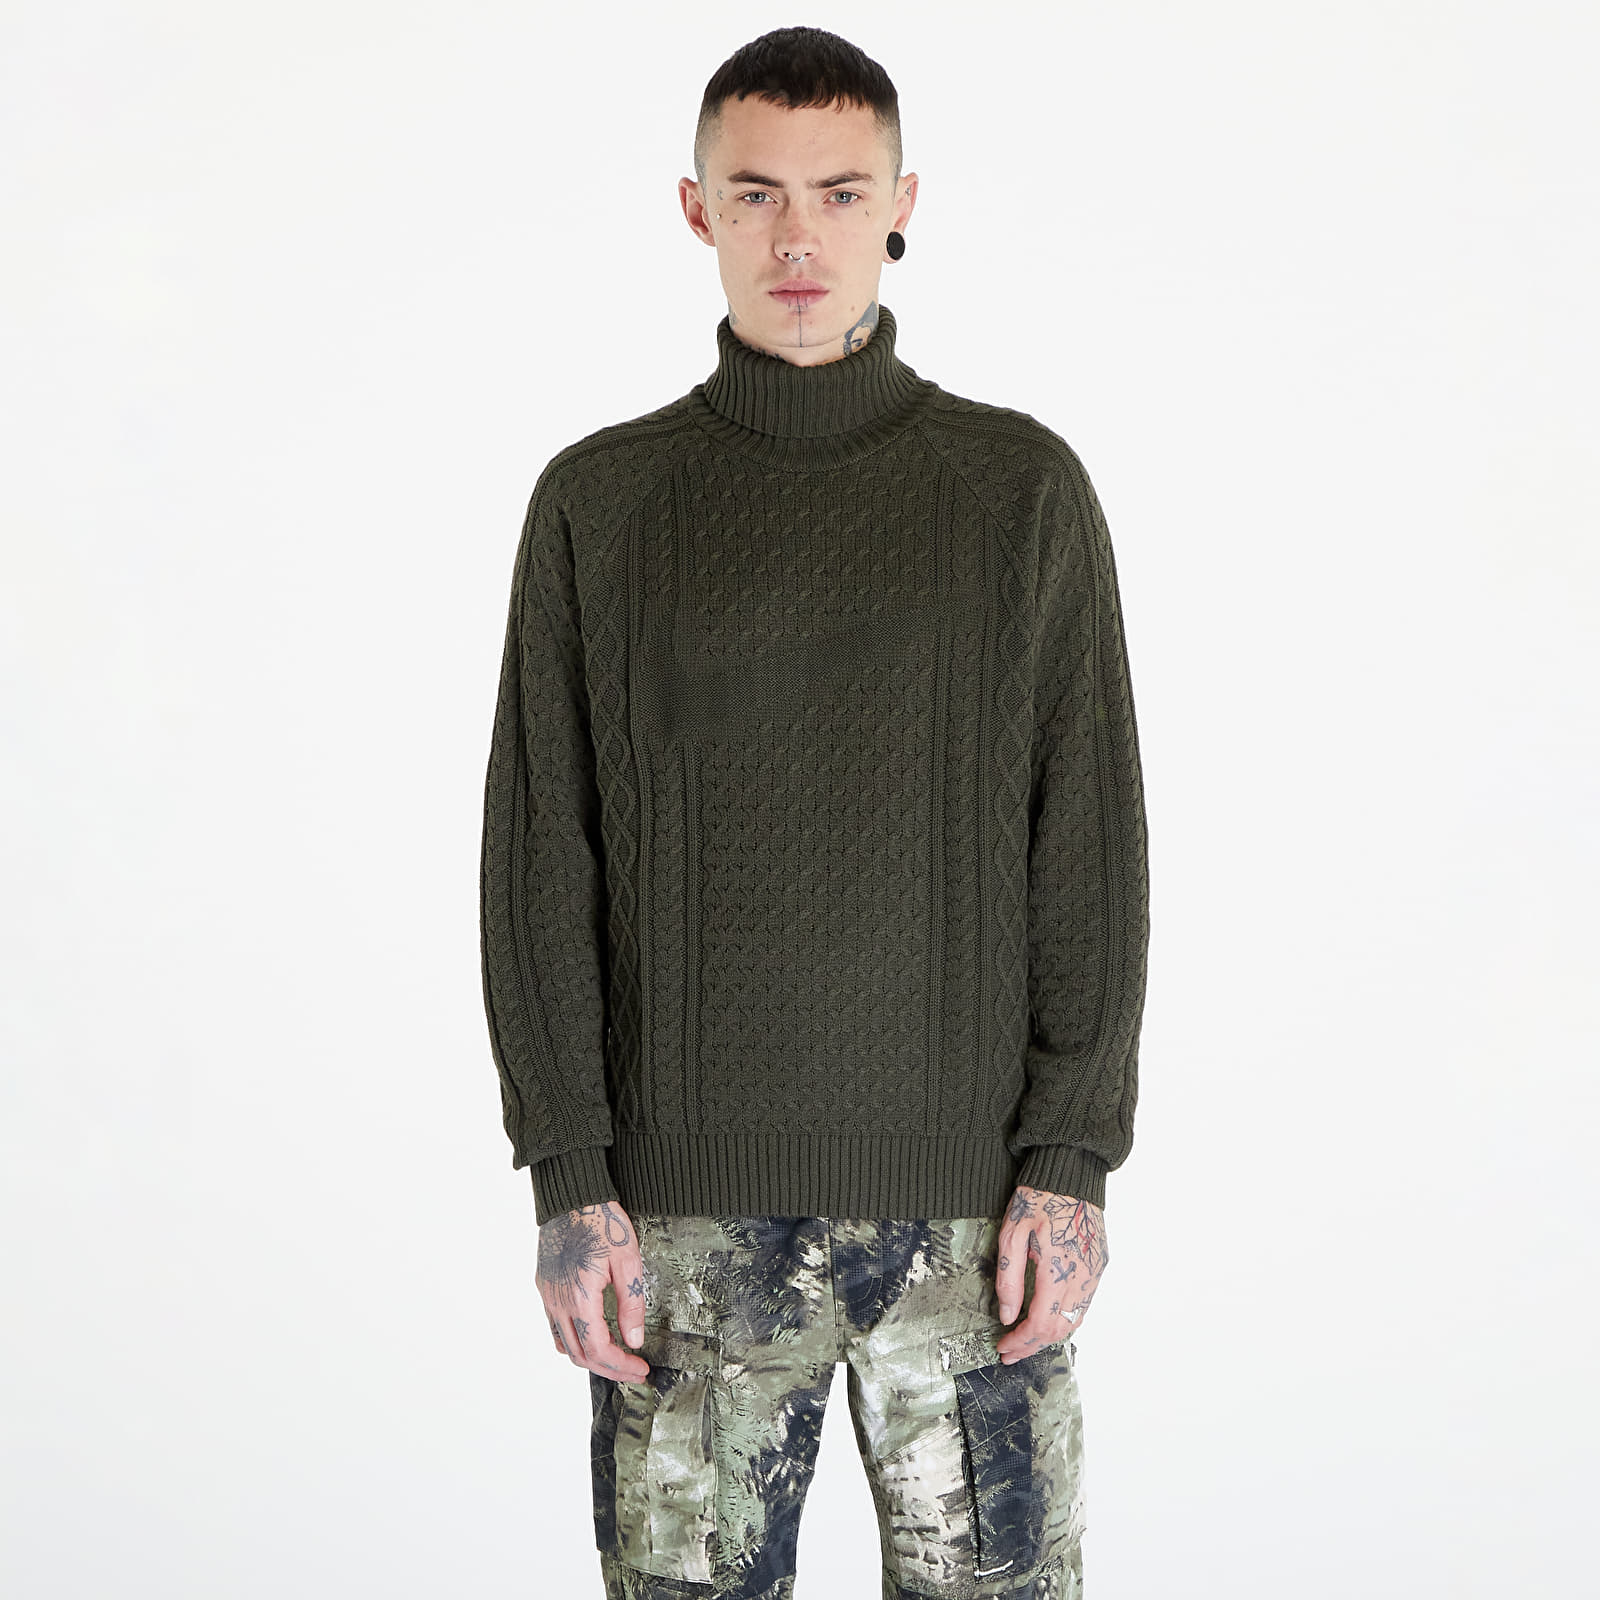 Nike Life Men\'s Cable Knit Turtleneck Sweater Cargo Khaki